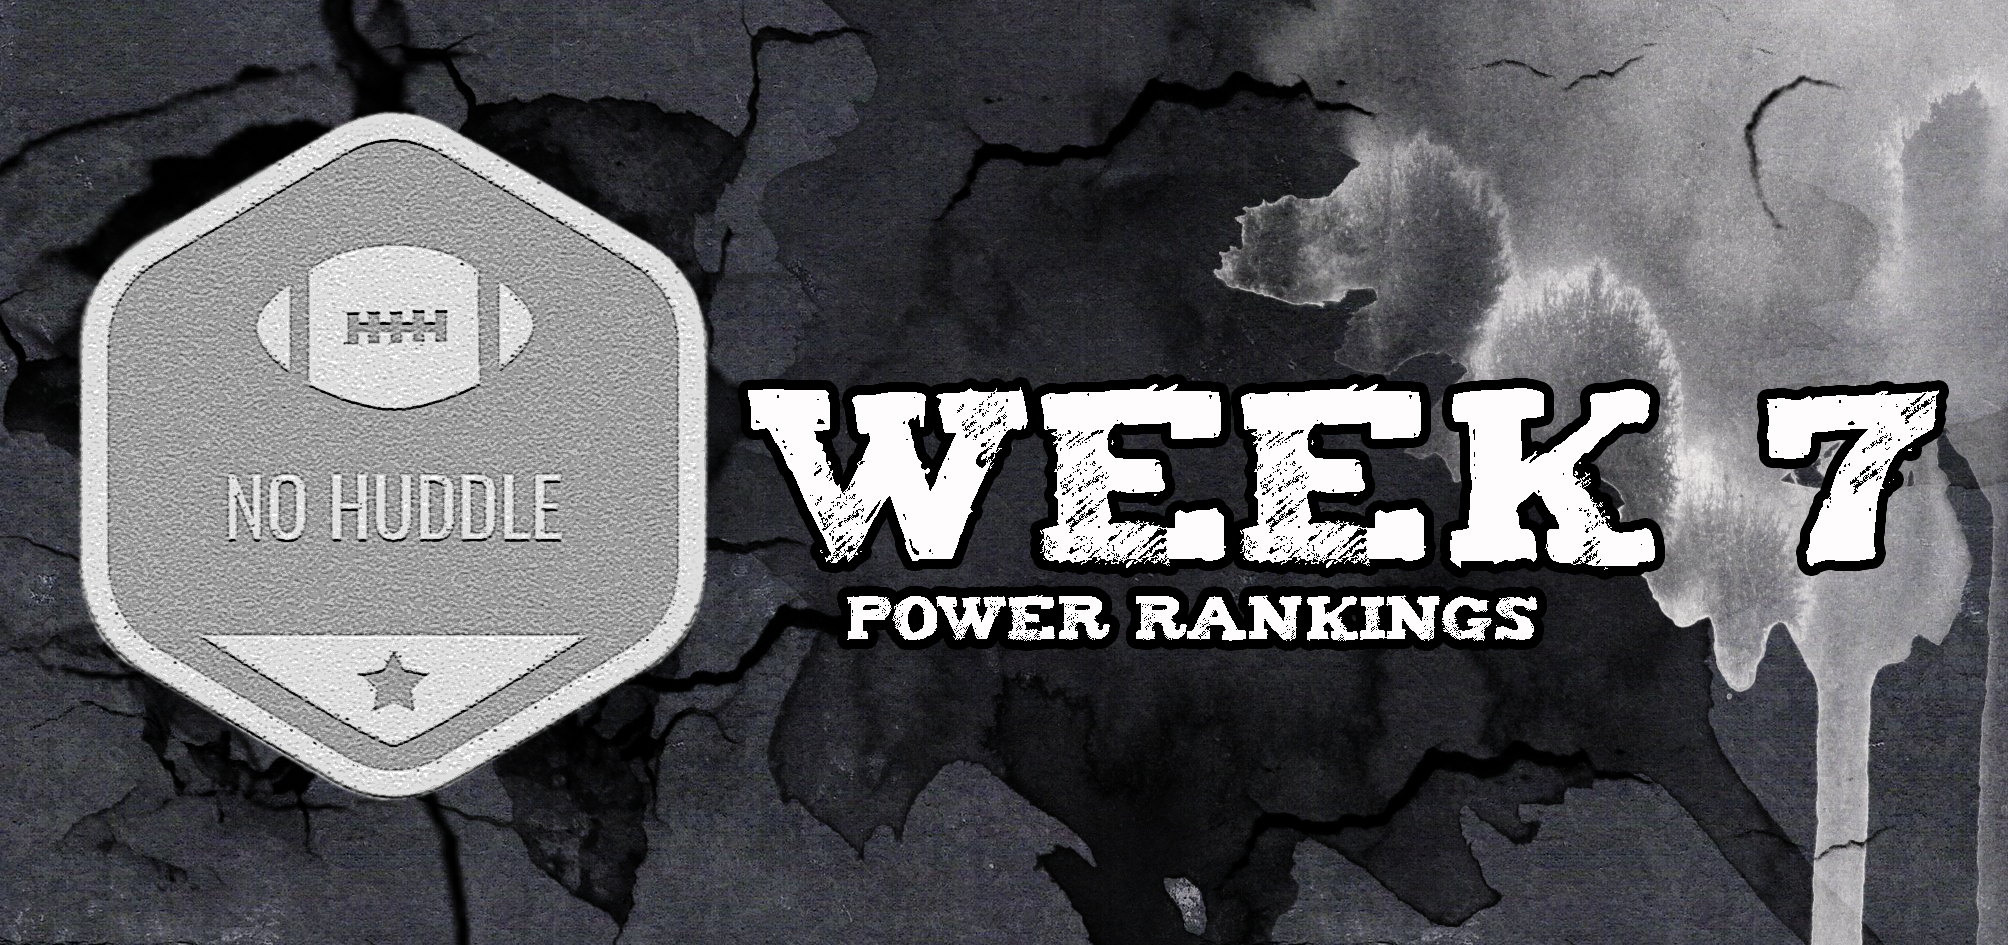 Power Rankings: Semana 7